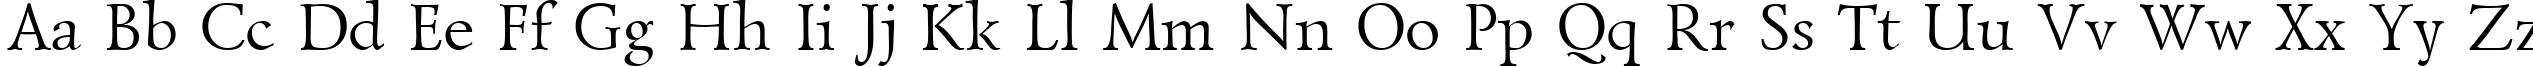 Пример написания английского алфавита шрифтом GoudyOld